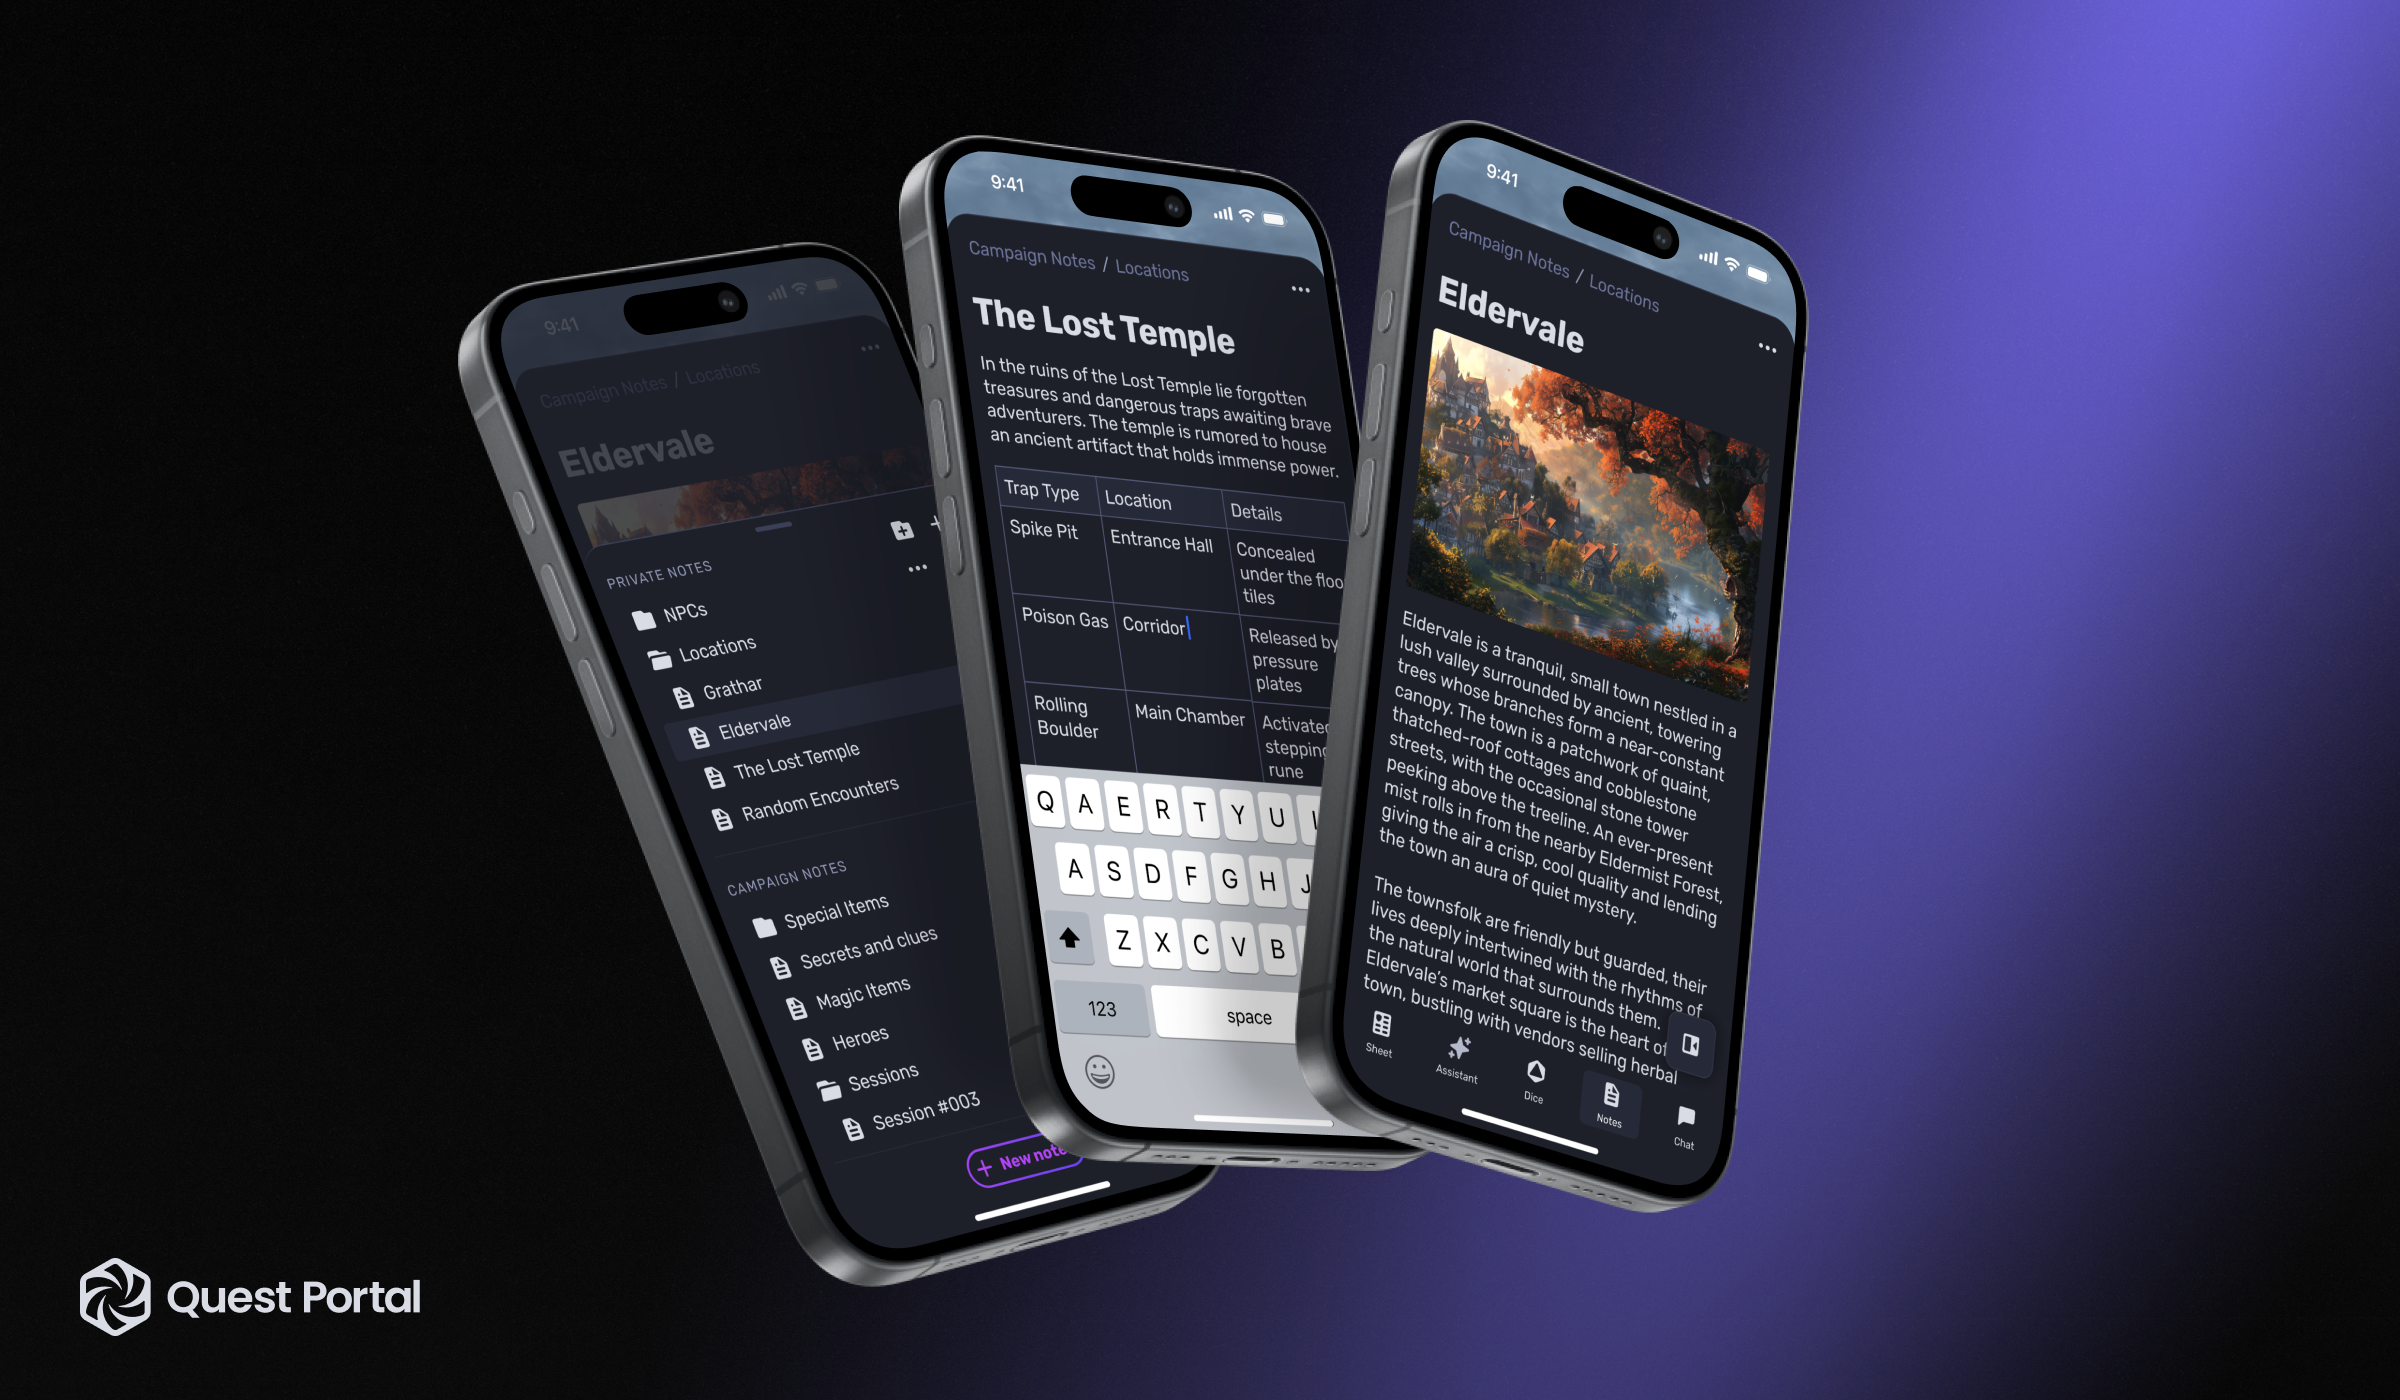 Mobile devices showcasing Quest Portal's Notes